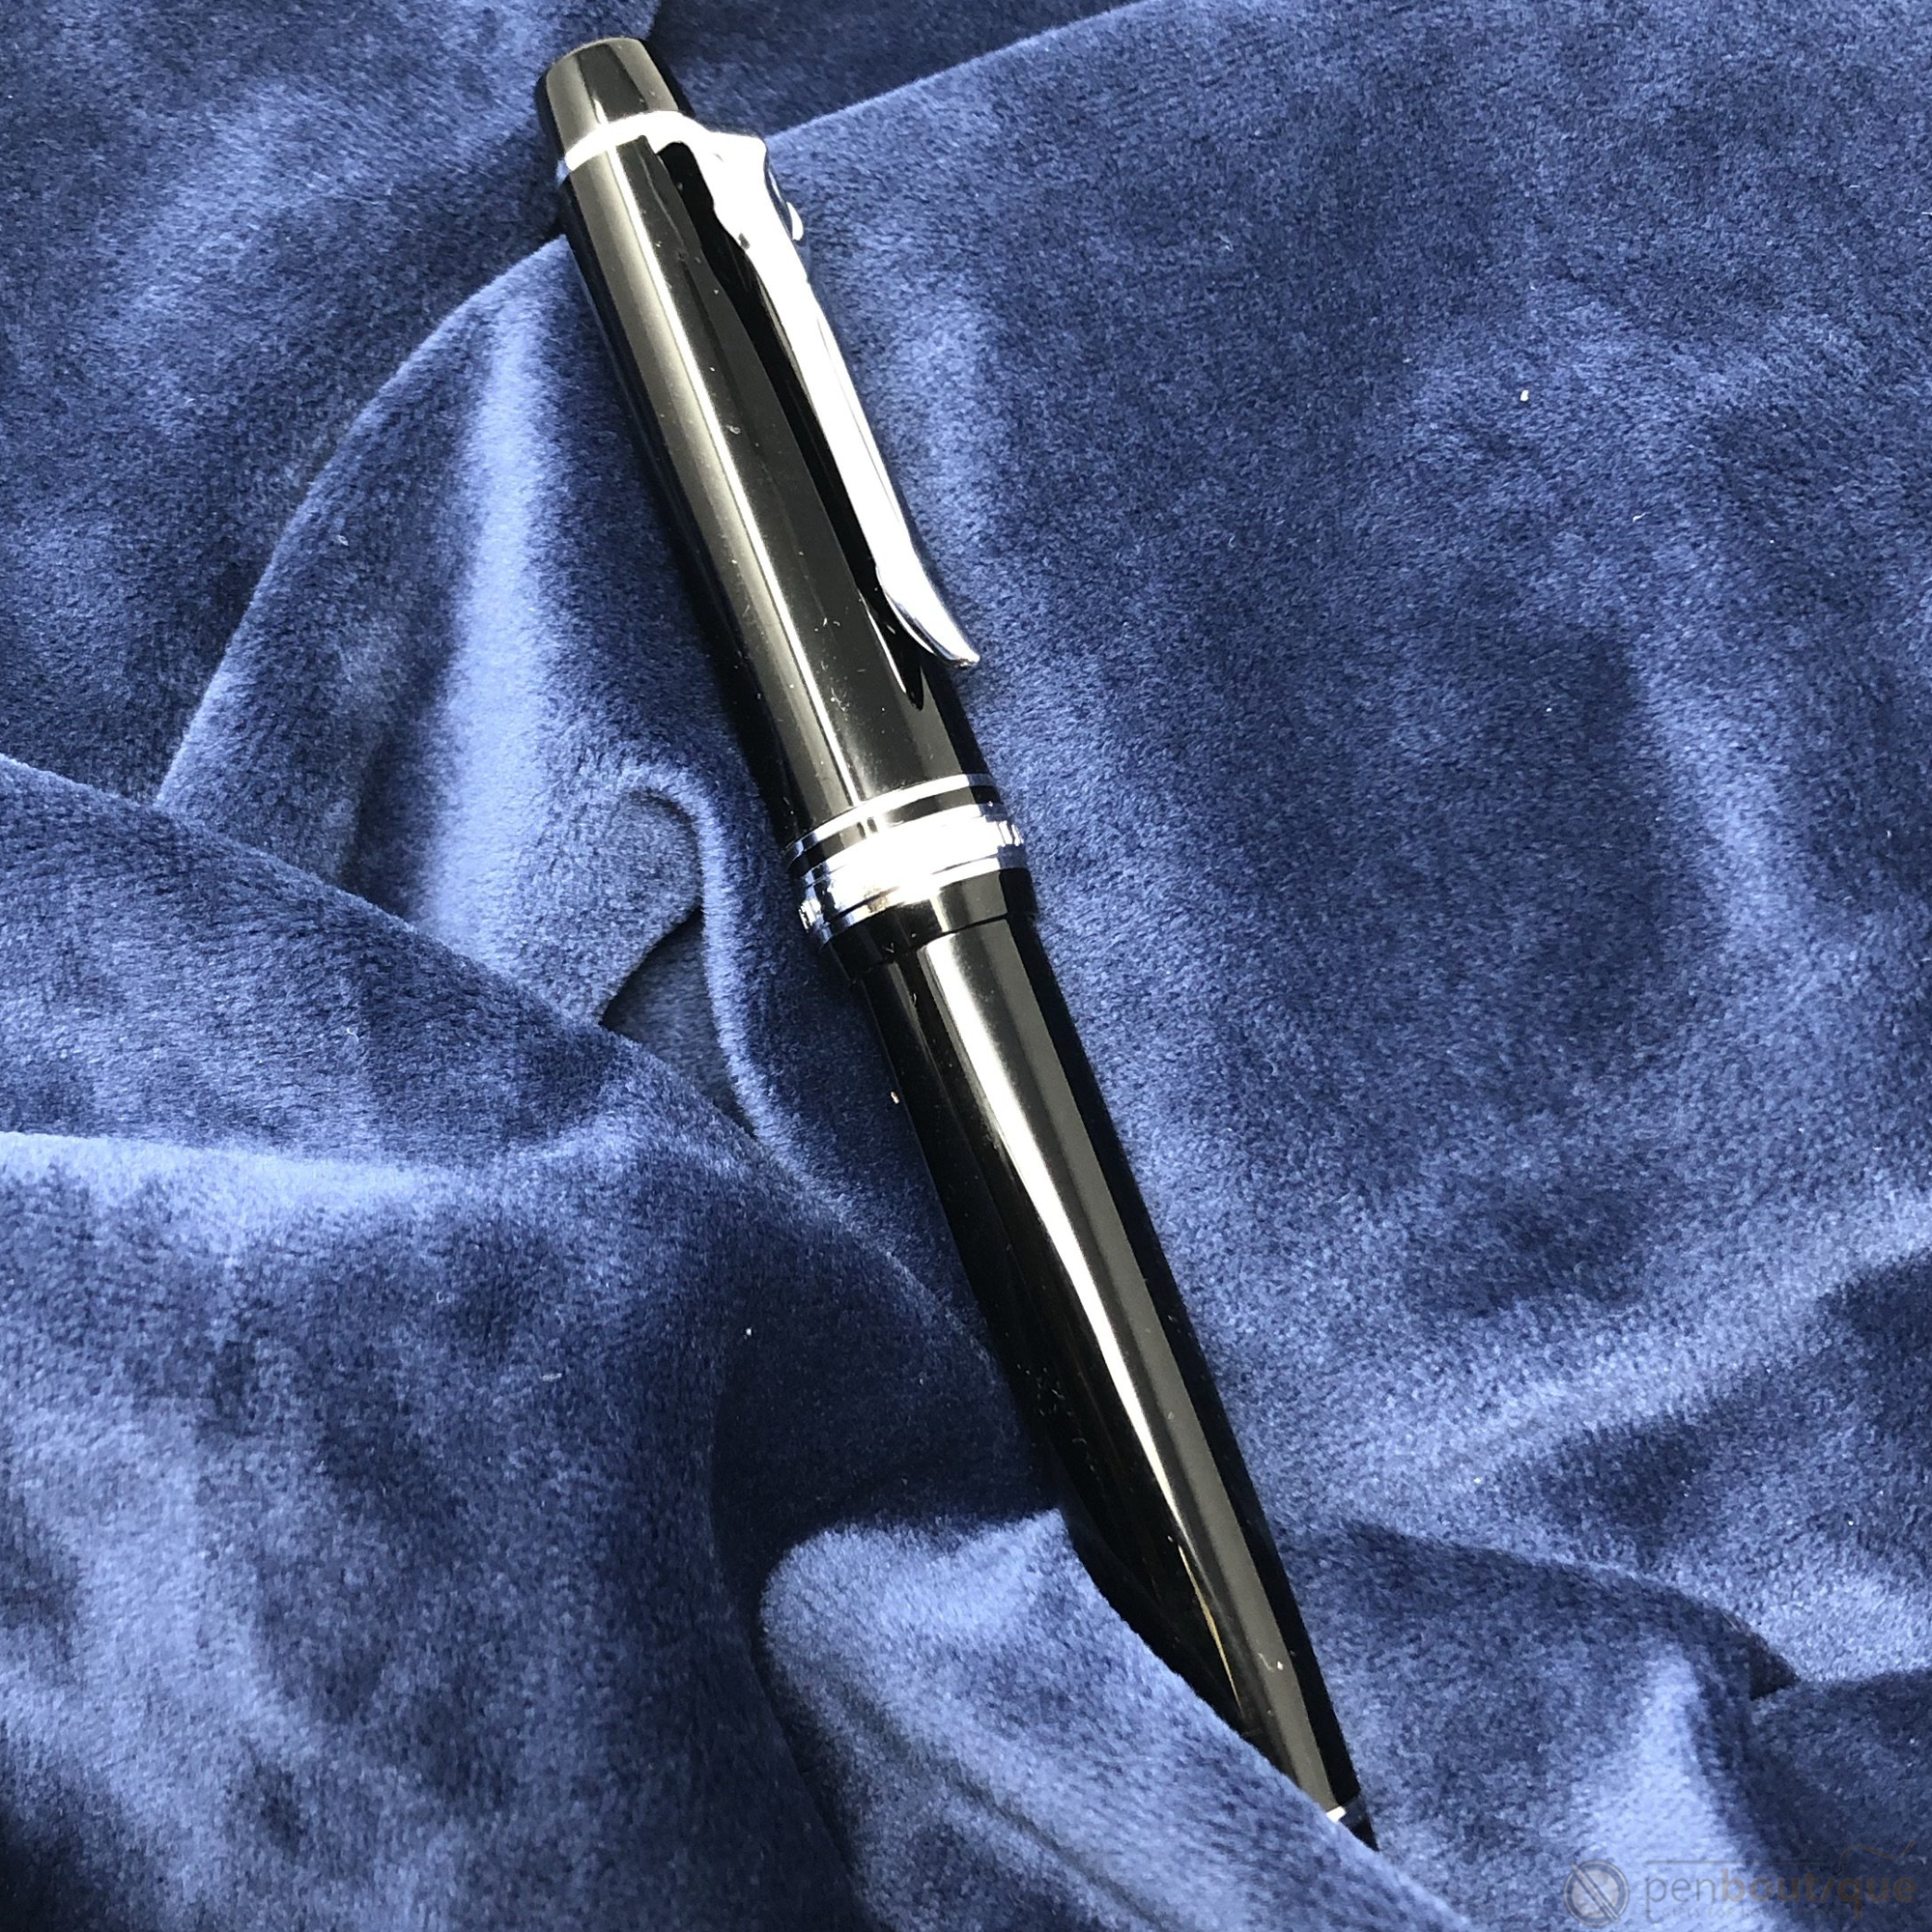 Sailor Professional Gear II Slim Fountain Pen - Black with Silver Trim-Pen Boutique Ltd